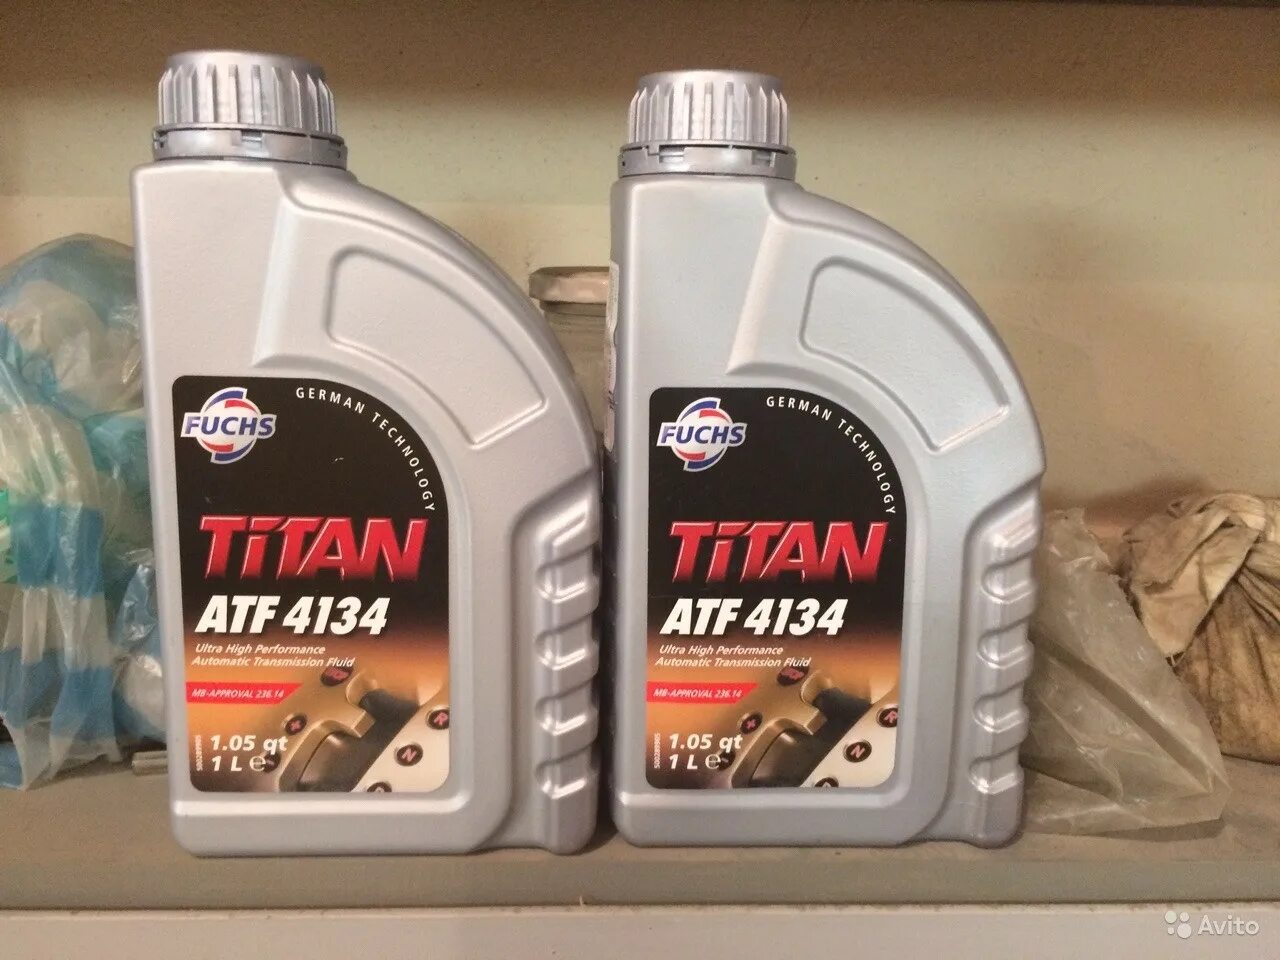 Атф титан. Titan ATF 4134. Titan ATF 4134 1 литр. Titan ATF 4134 5 литров. Fuchs Titan ATF 4134.